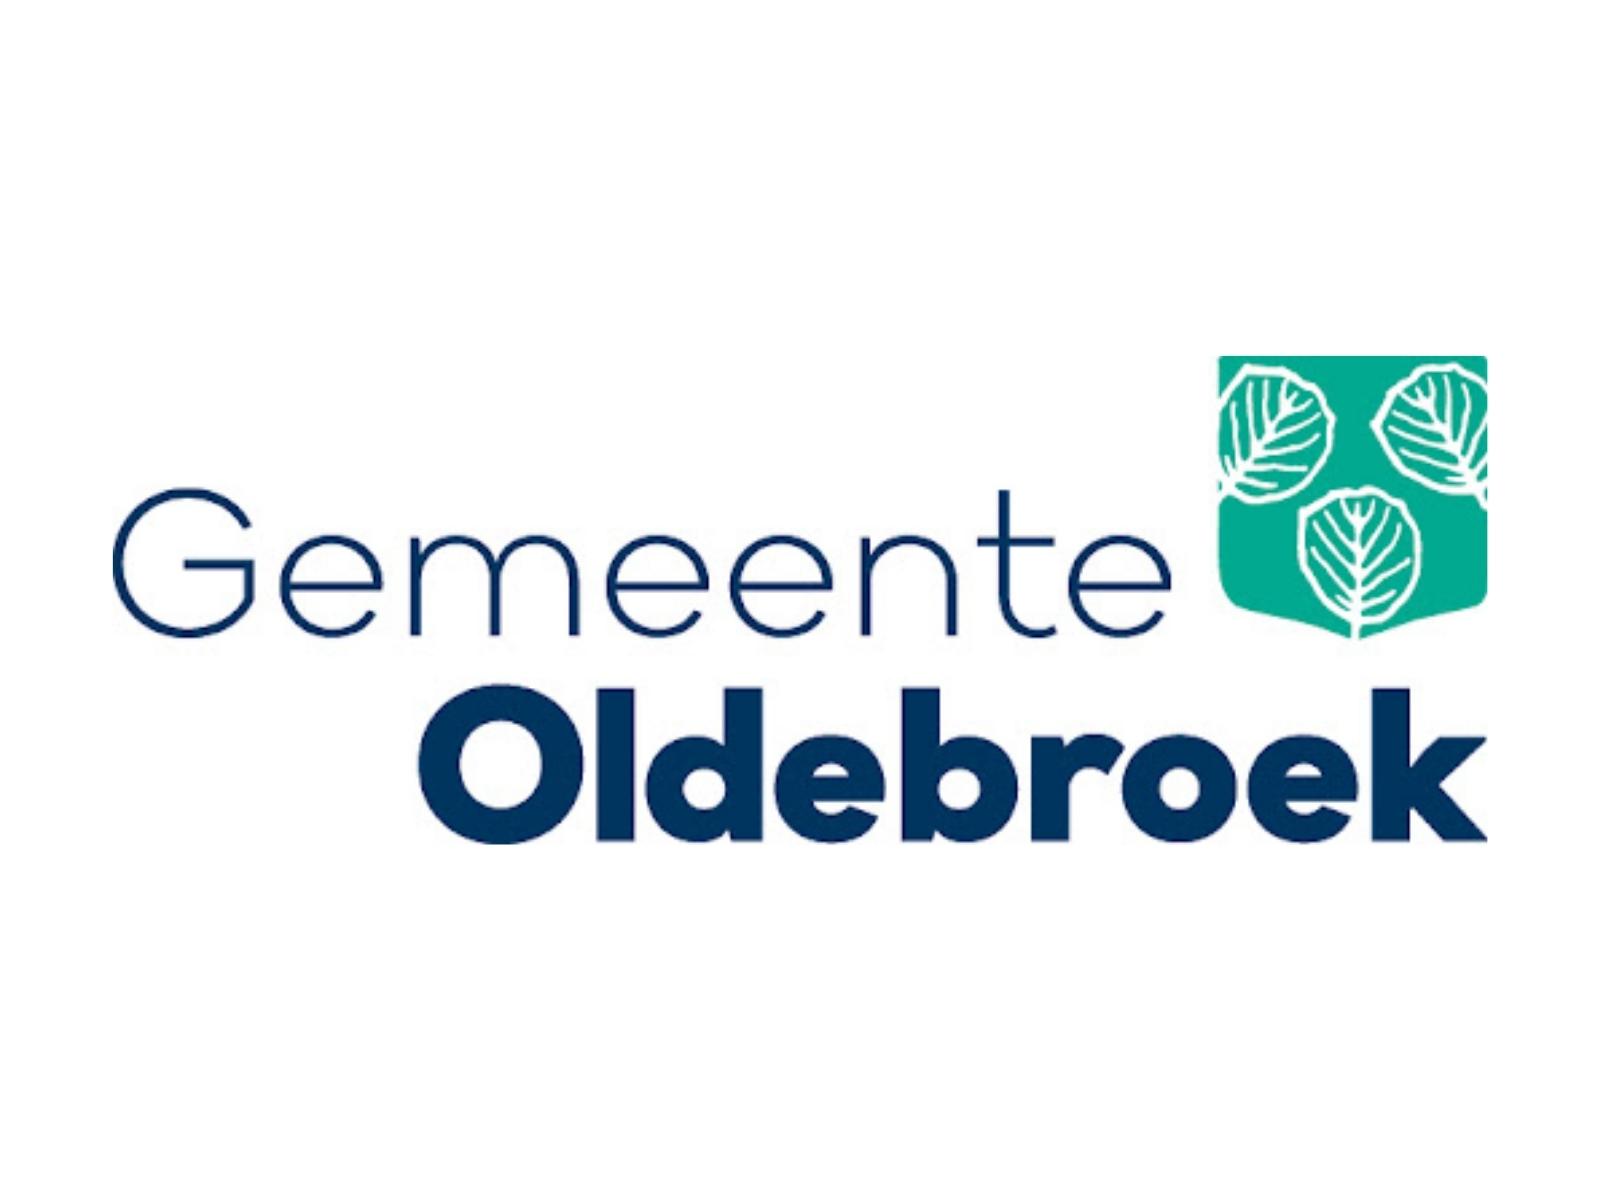 Municipality of Oldebroek